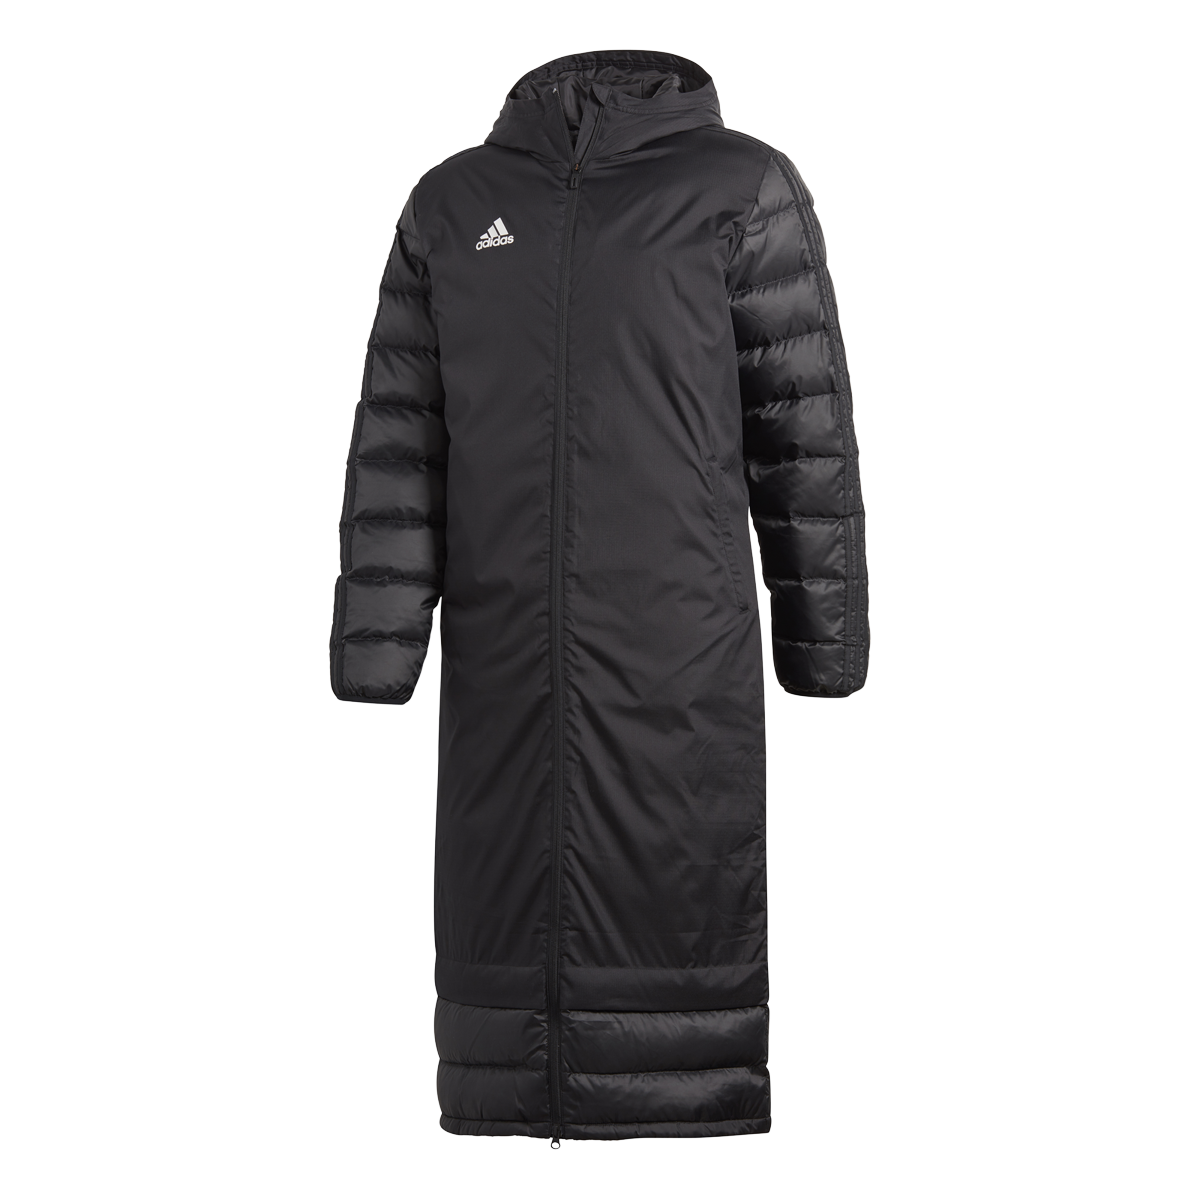 Adidas Winter Coat 18 černá/bílá UK S Pánské